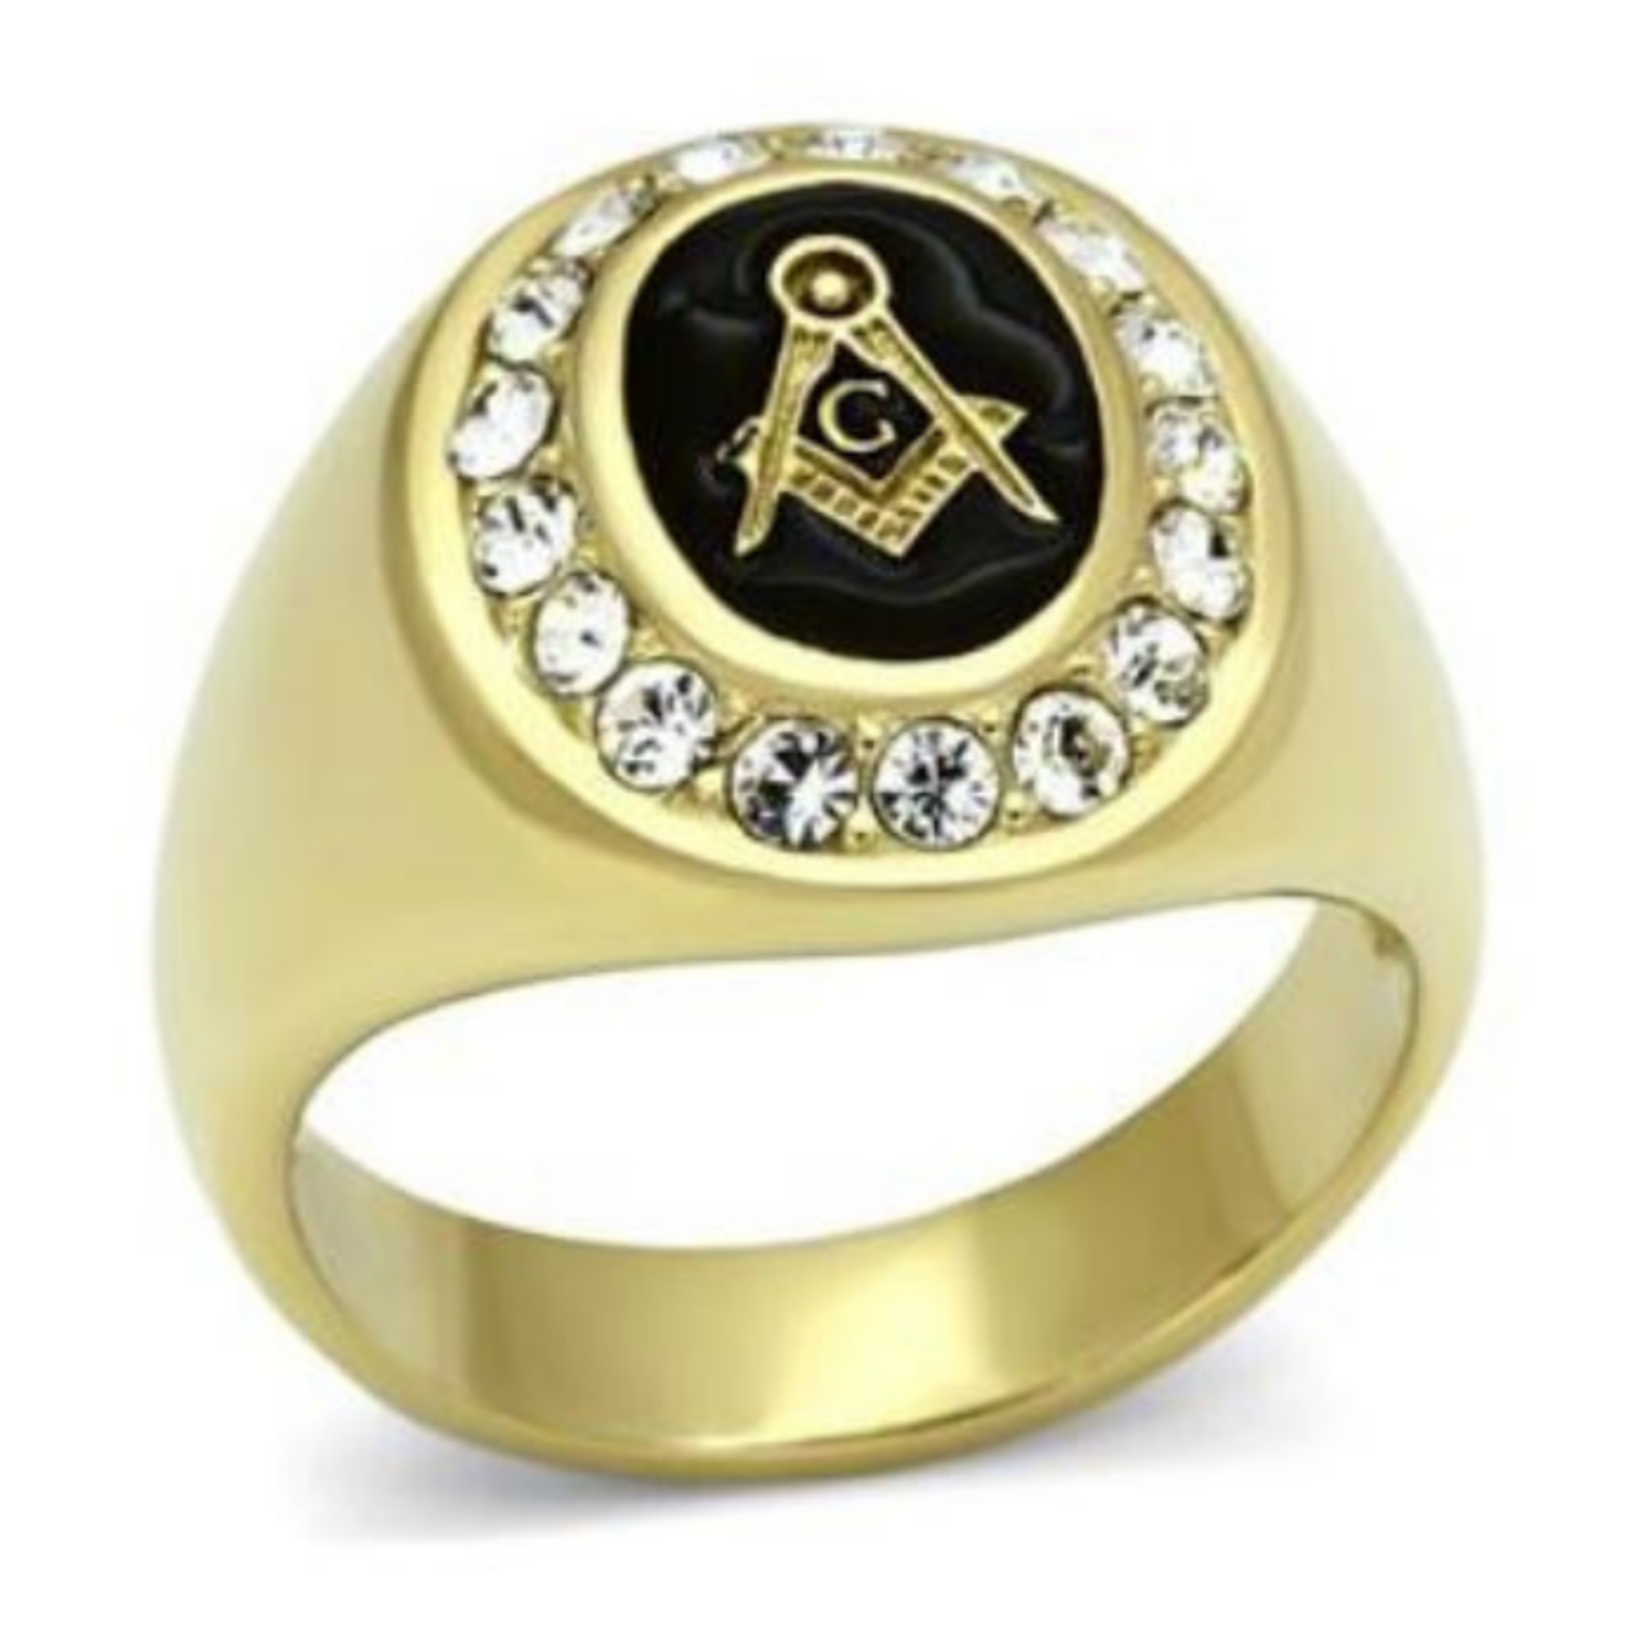 ROS Masonic Stainless Steel Ring